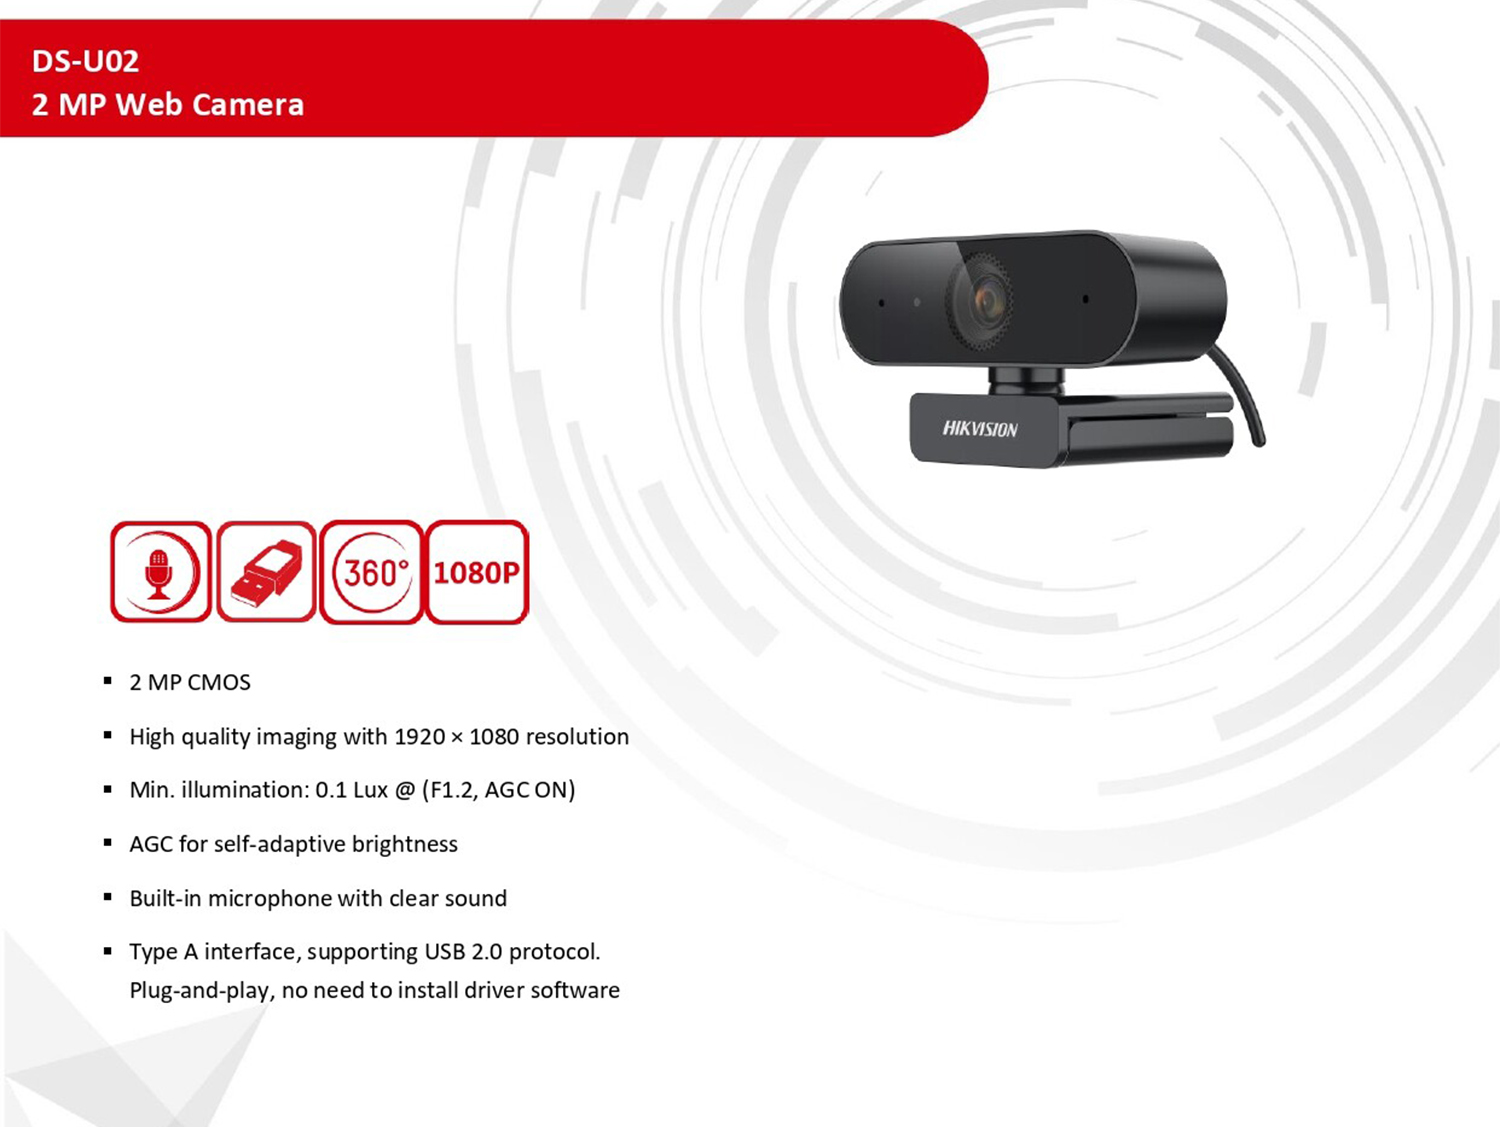 Hikvision 1080p HD USB 2.0 MP Web Camera – DS-U02